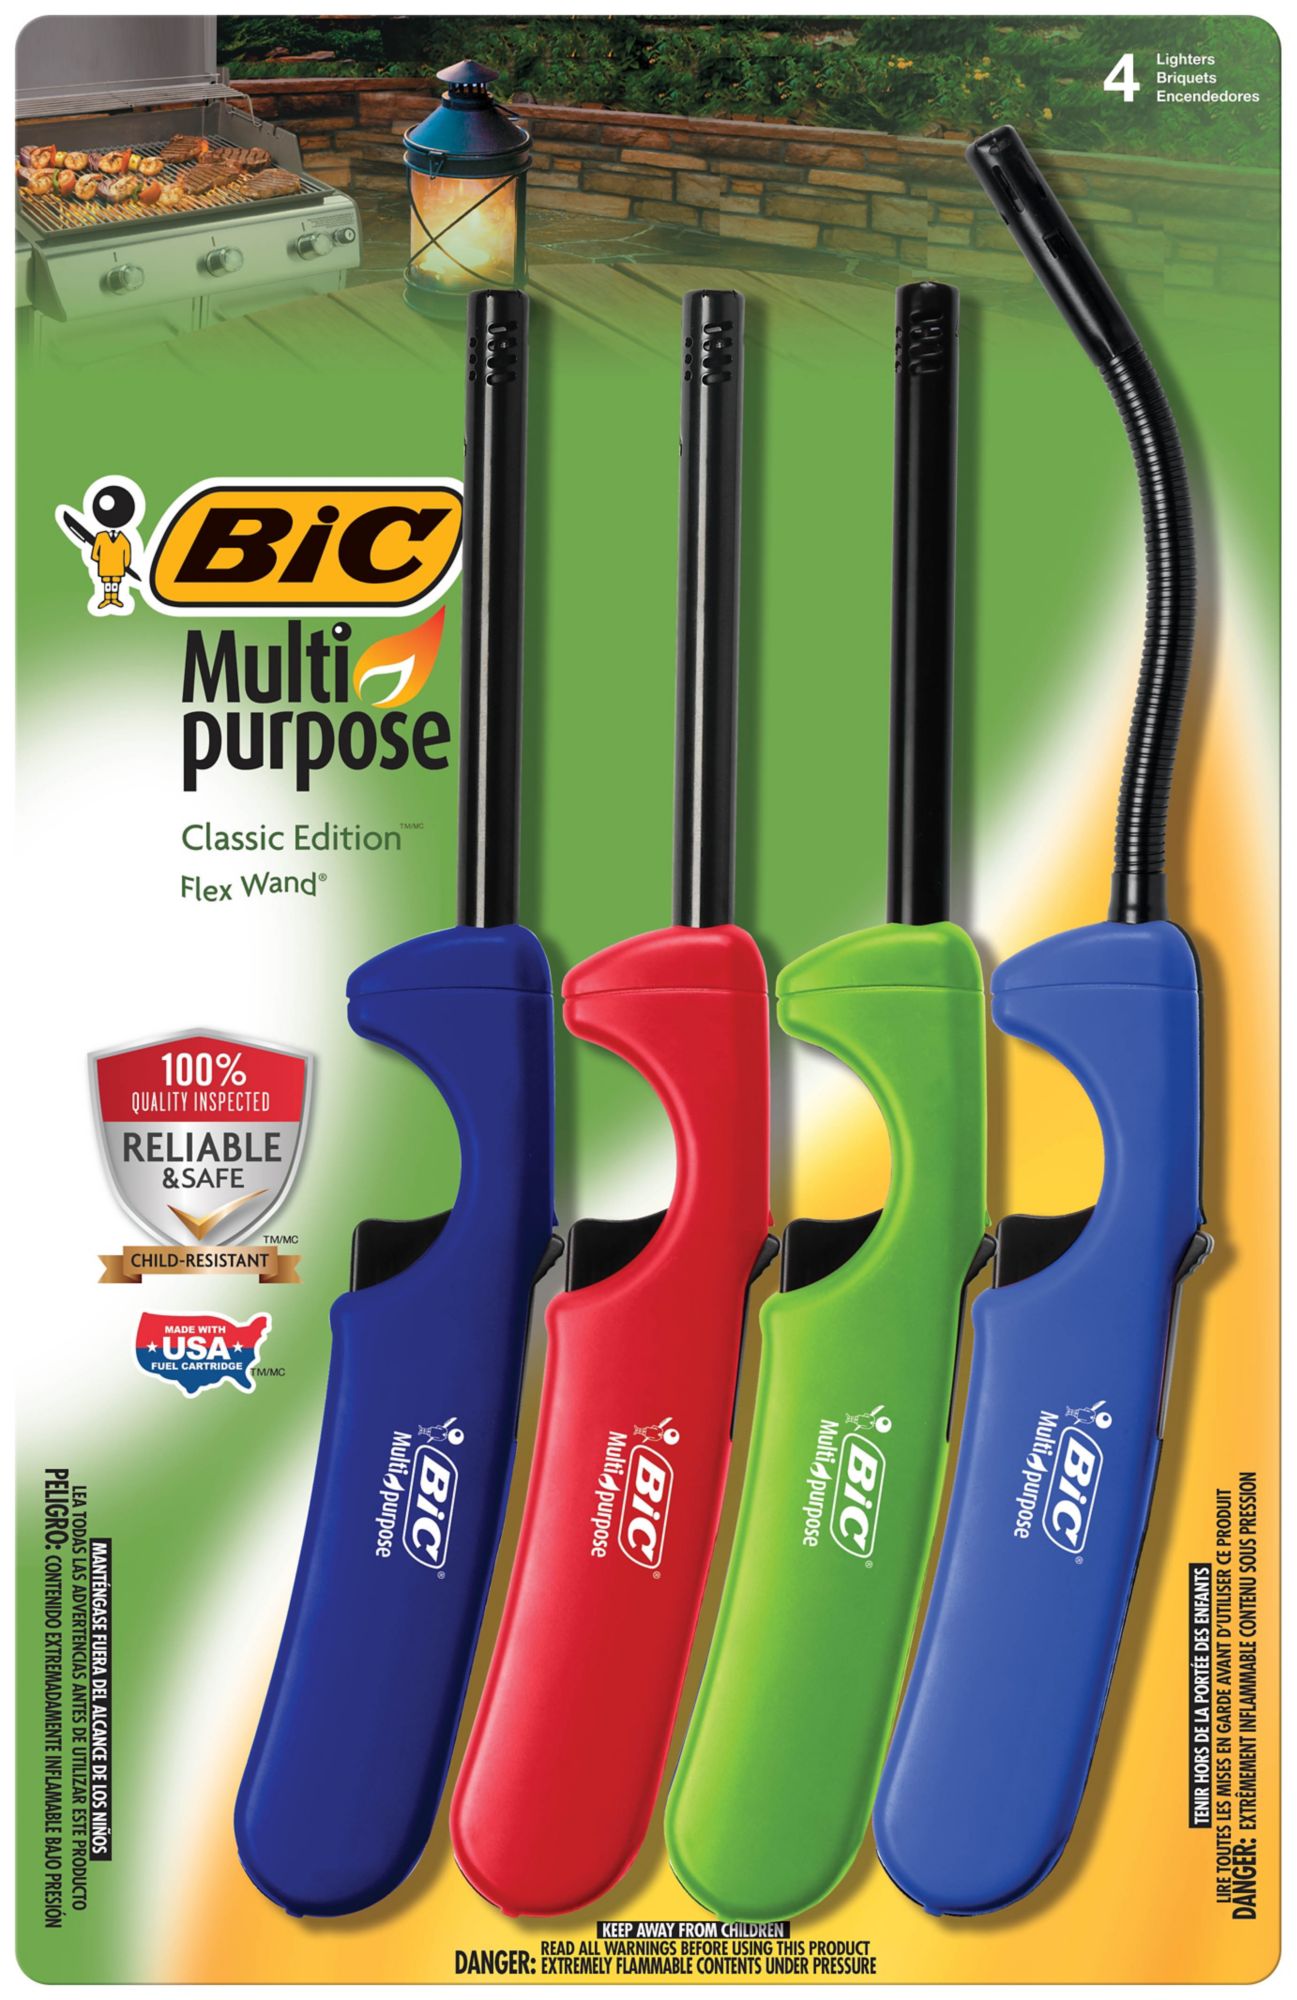 BIC Multi-Purpose 4-Pc. Classic Edition and Flex Wand Lighter Set